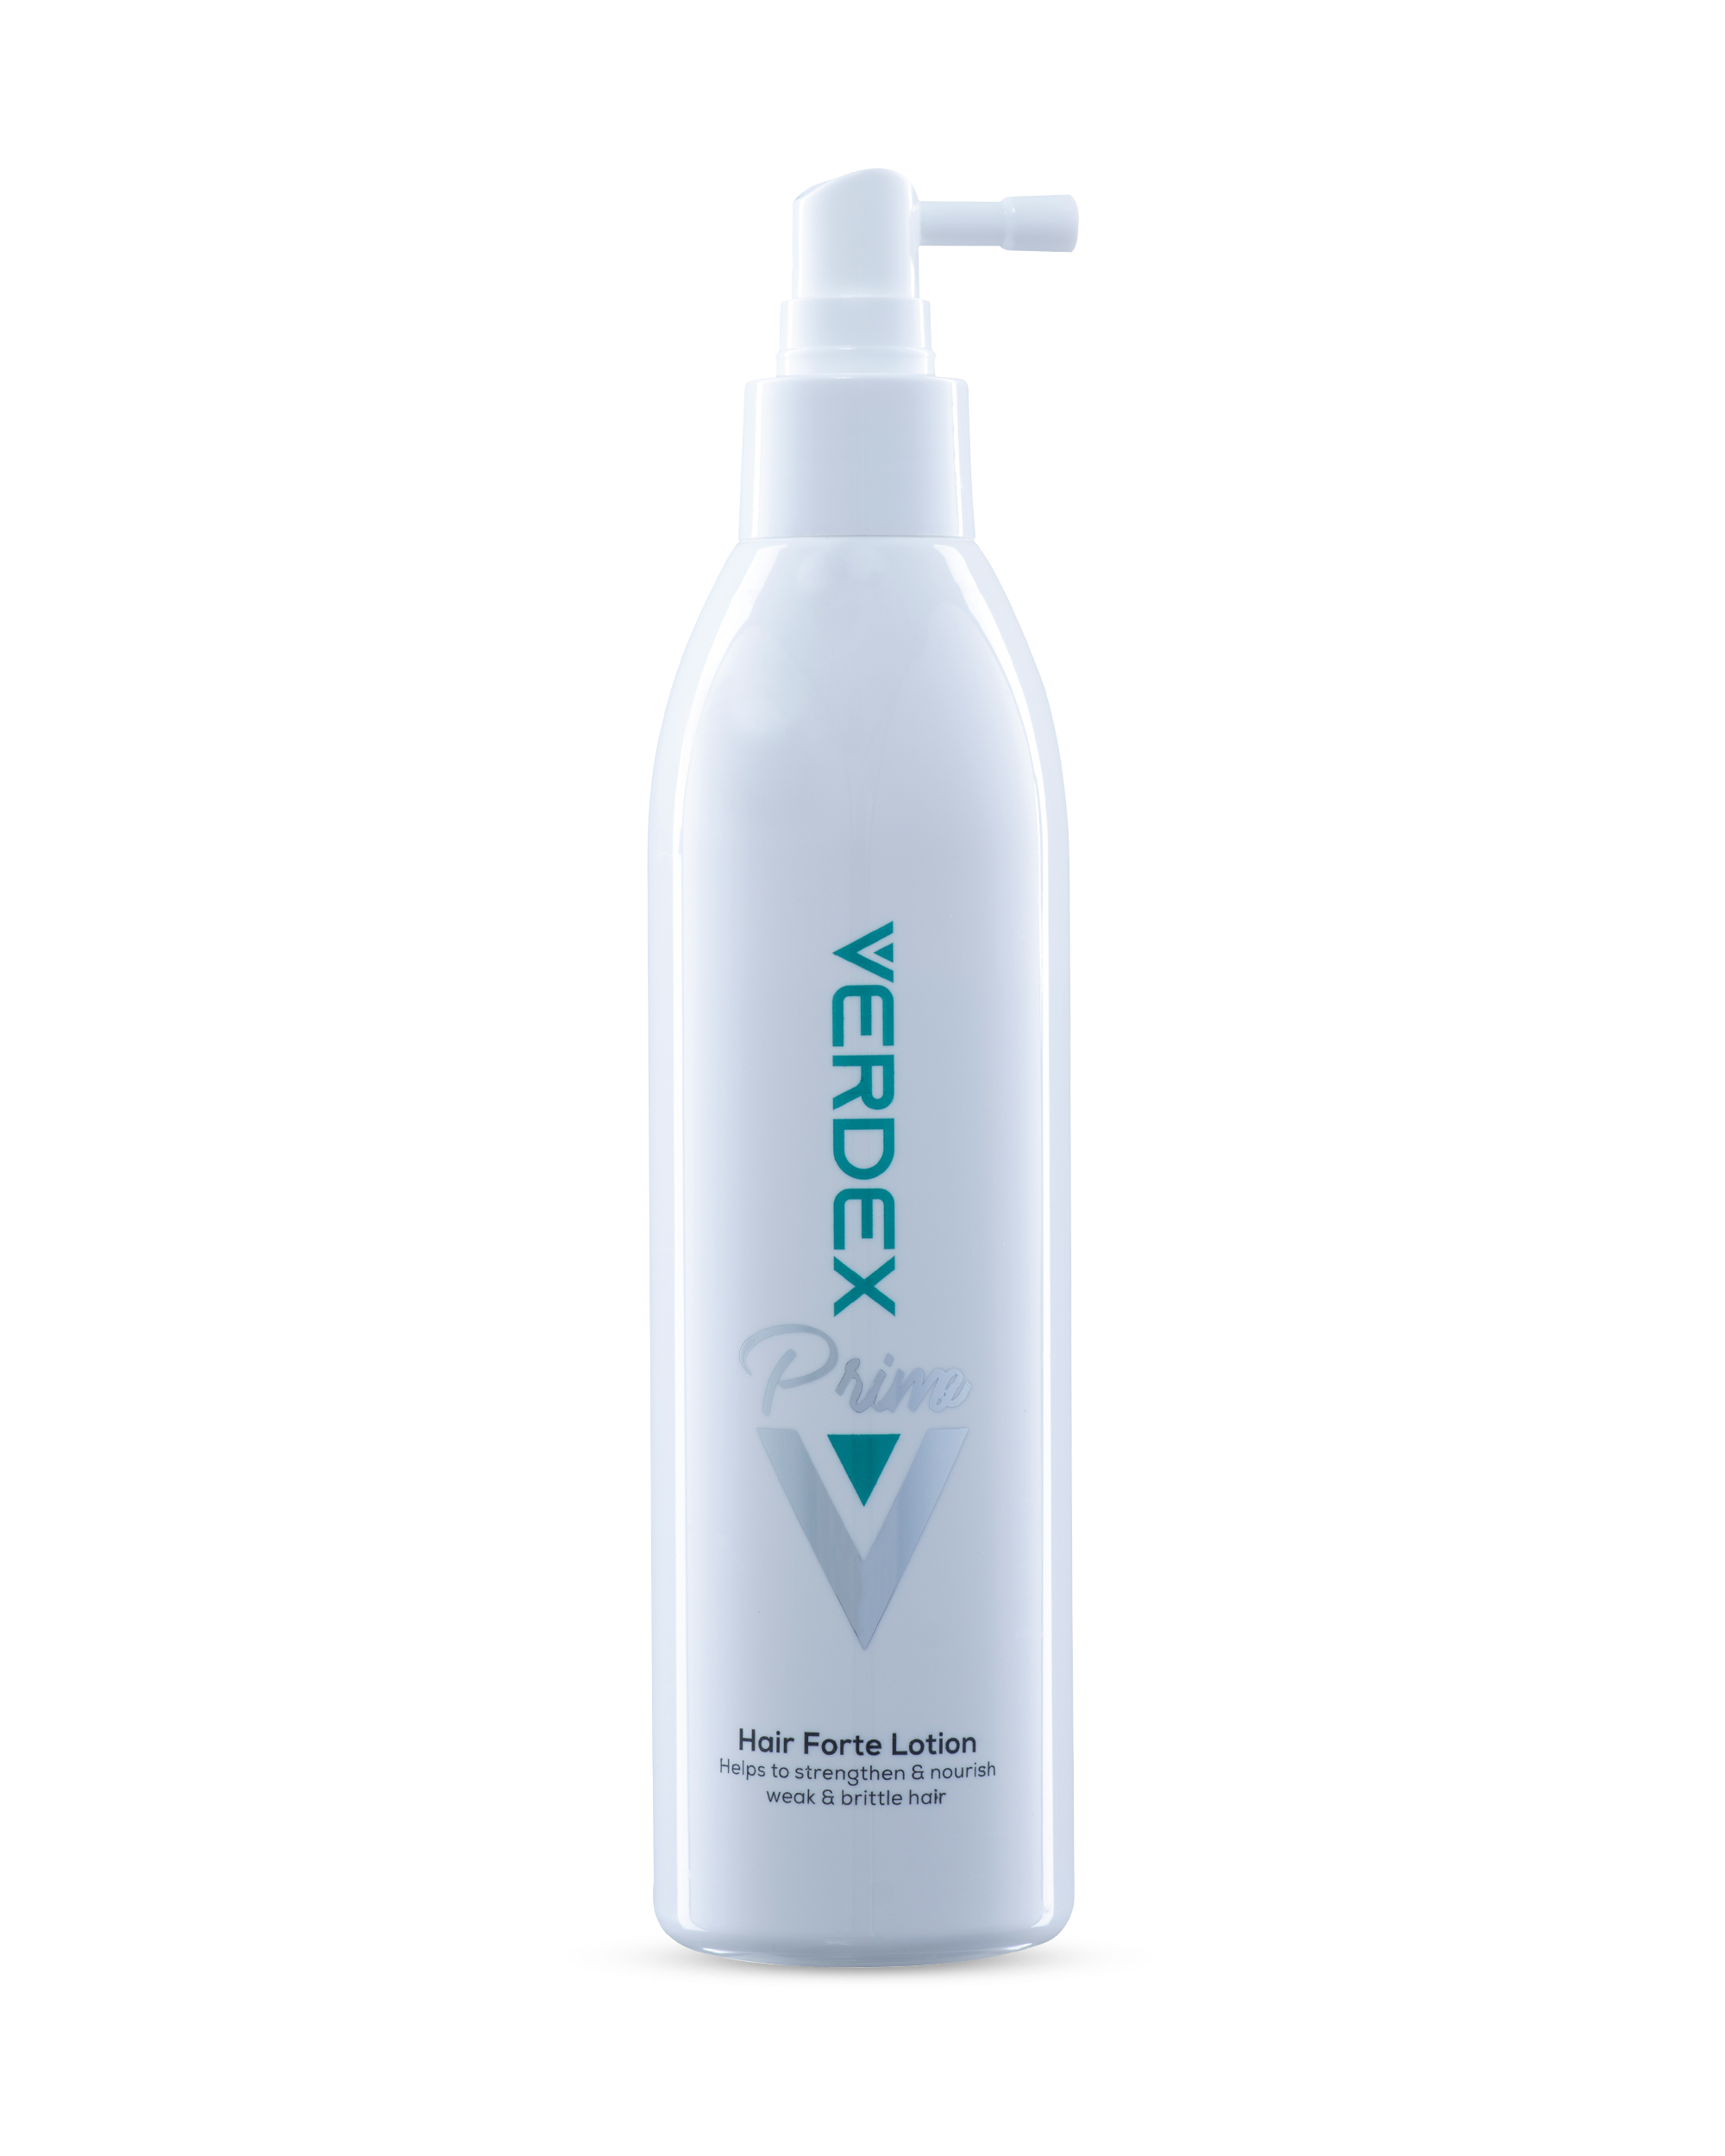 Verdex Prime - Hair Forte Lotion